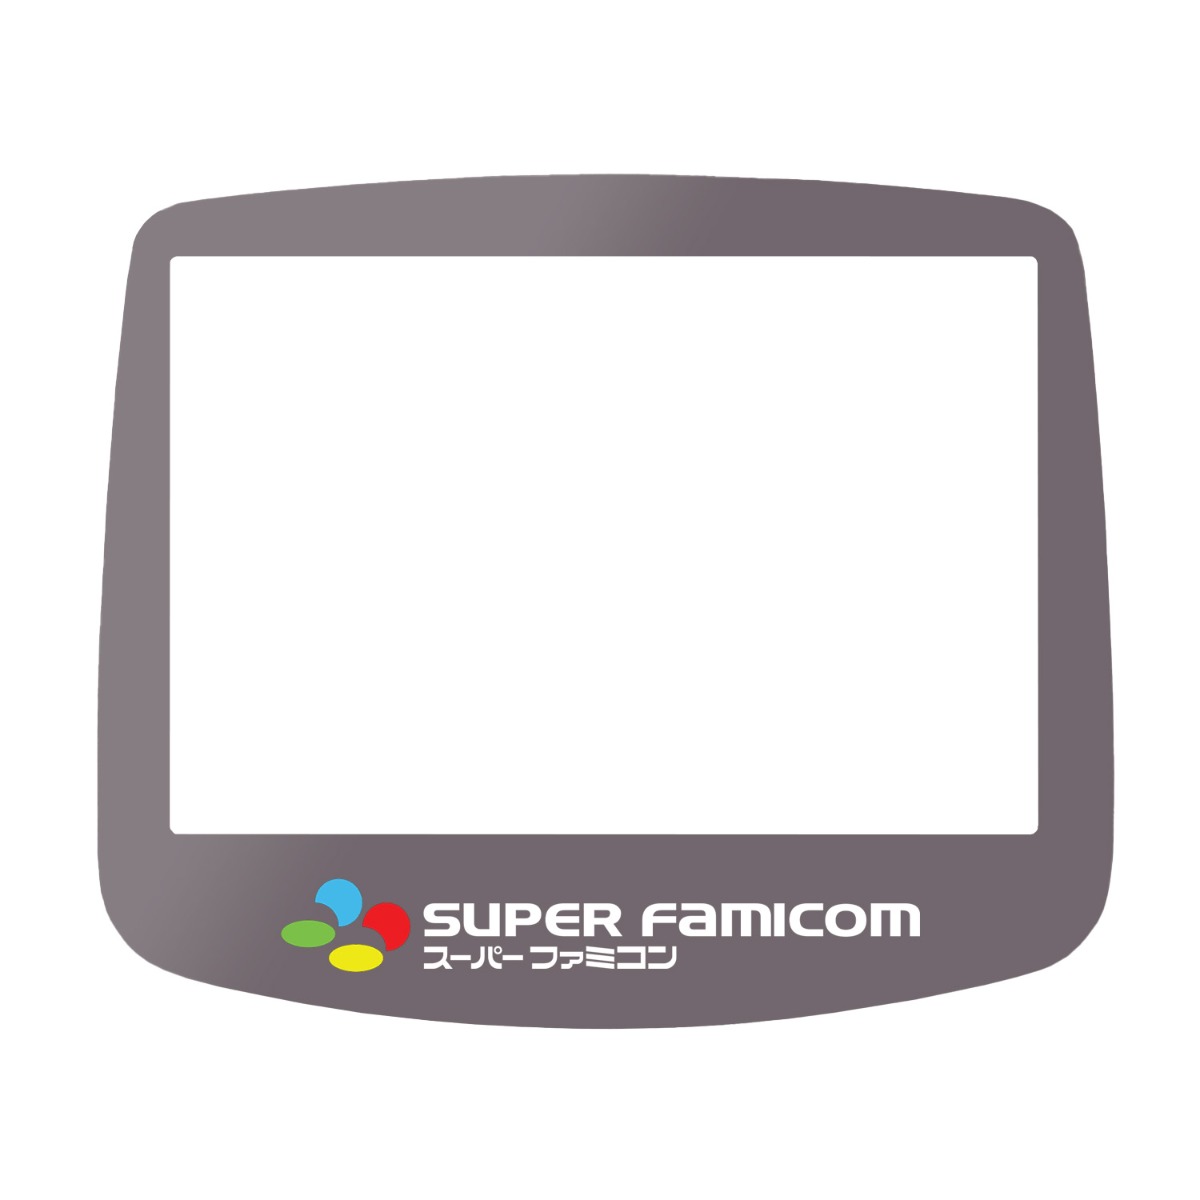 Game Boy Advance IPS schijf (SFAM)